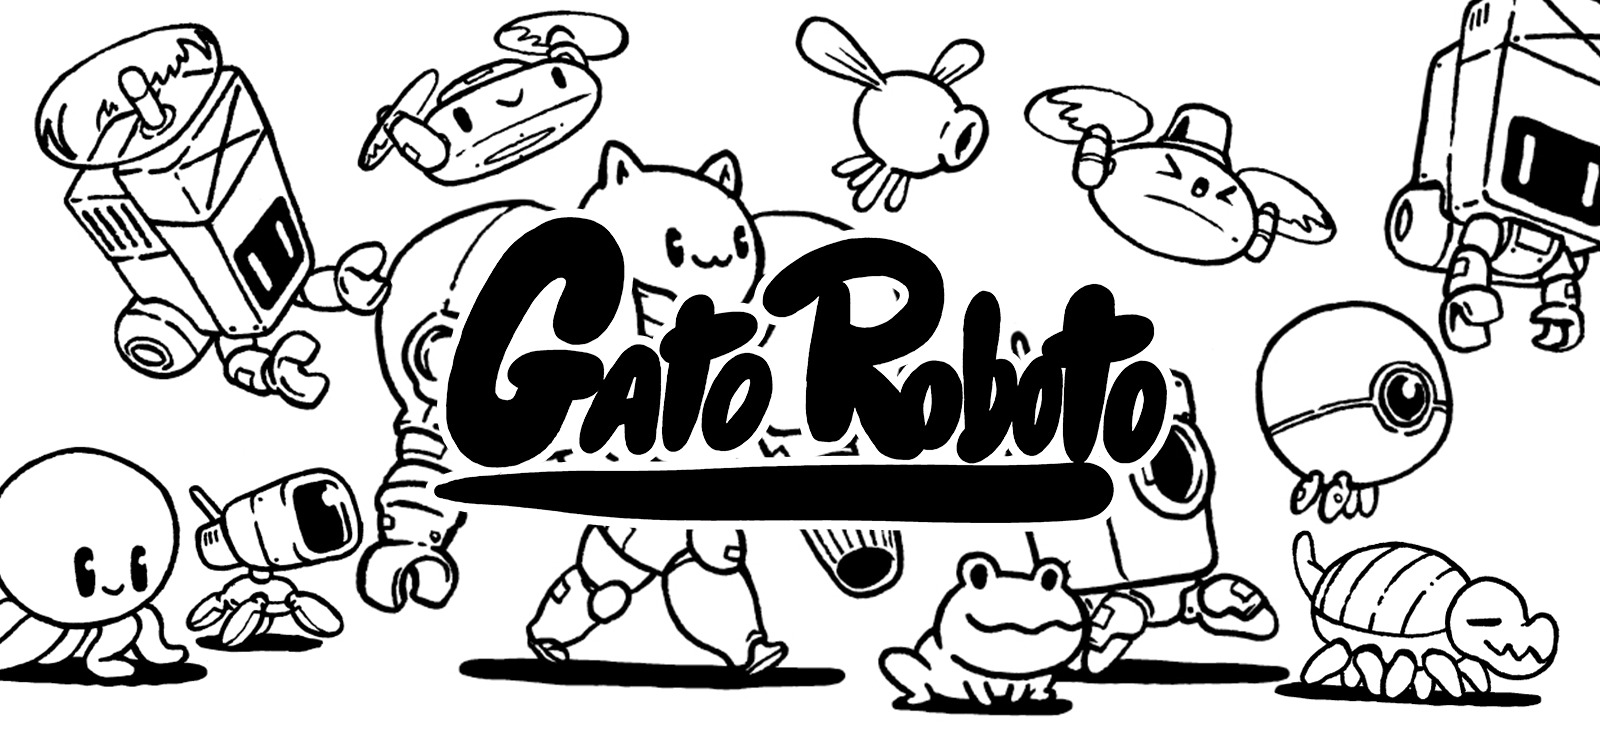 gato roboto ps4 download free